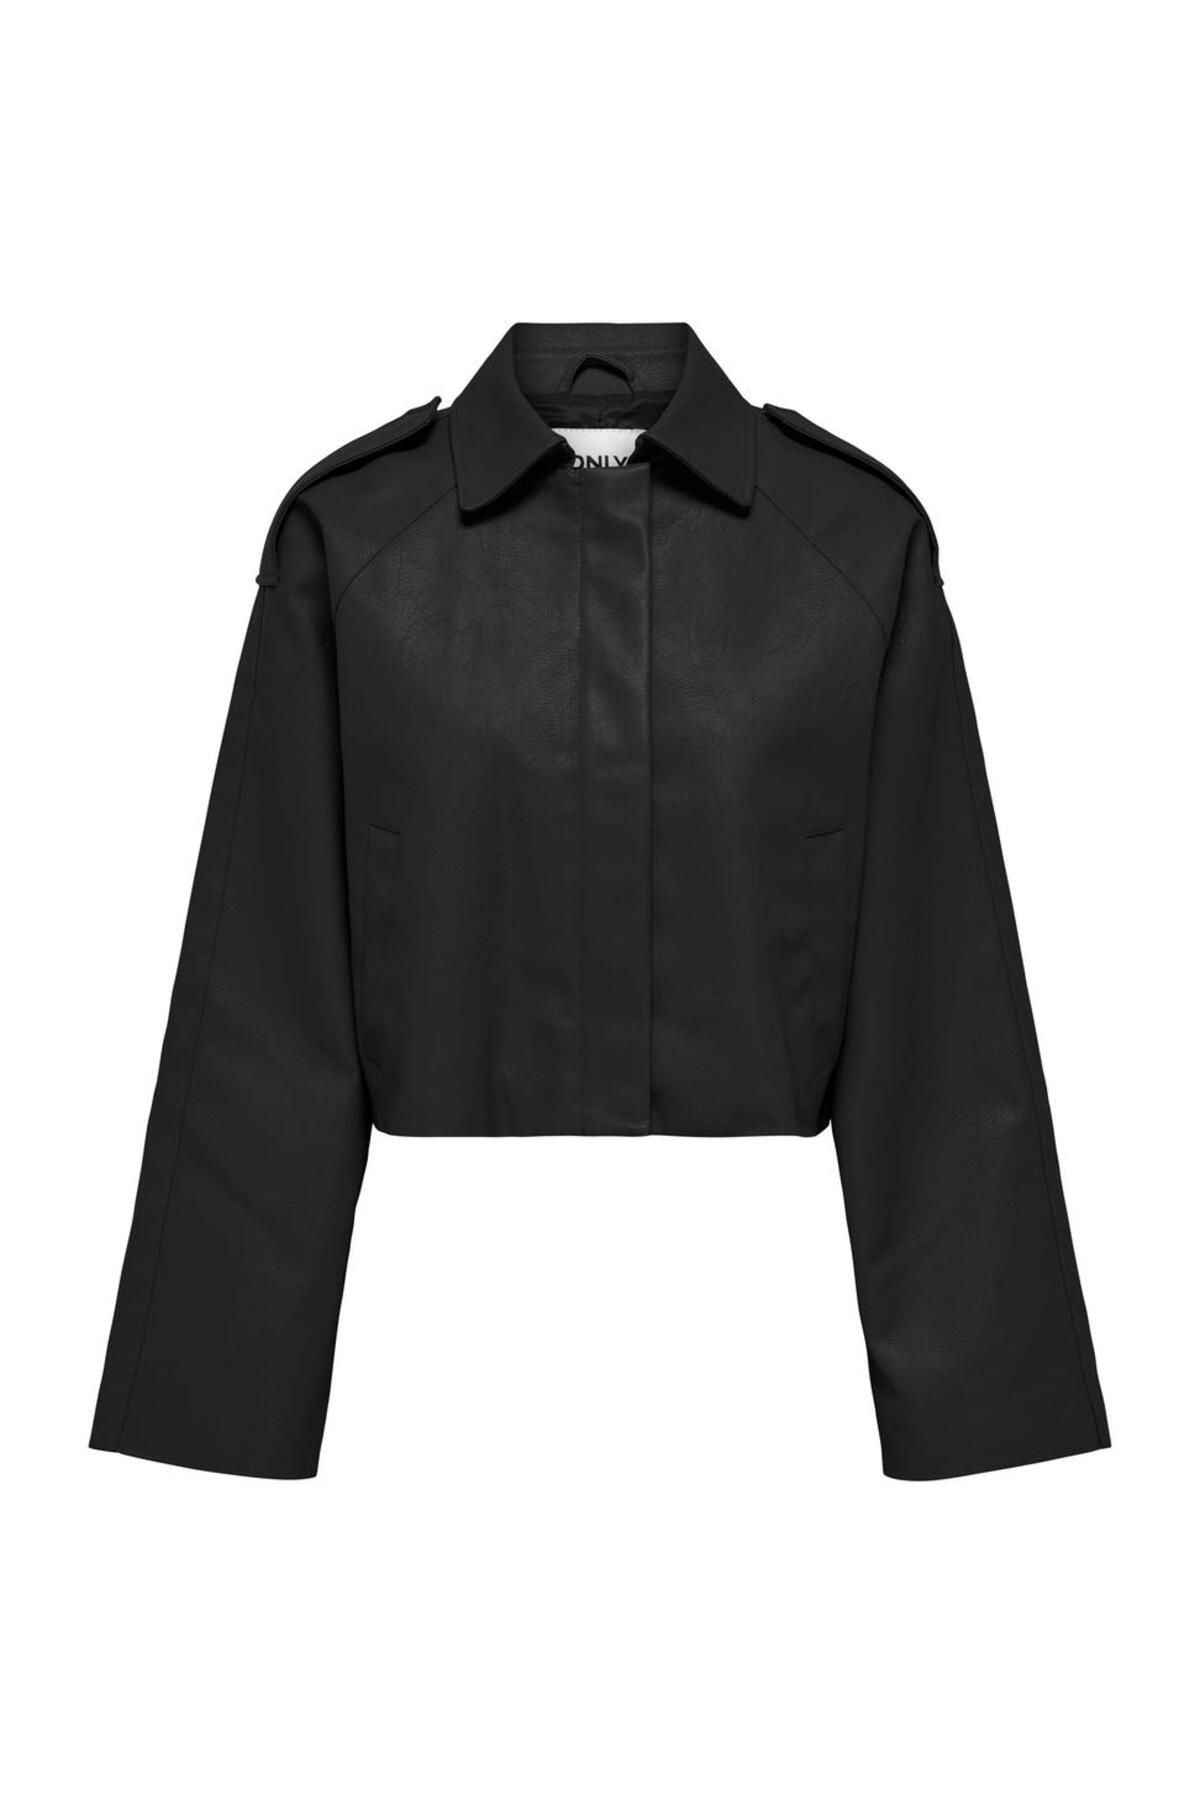 Only Vera Kadın Siyah Ceket (15308586-B)